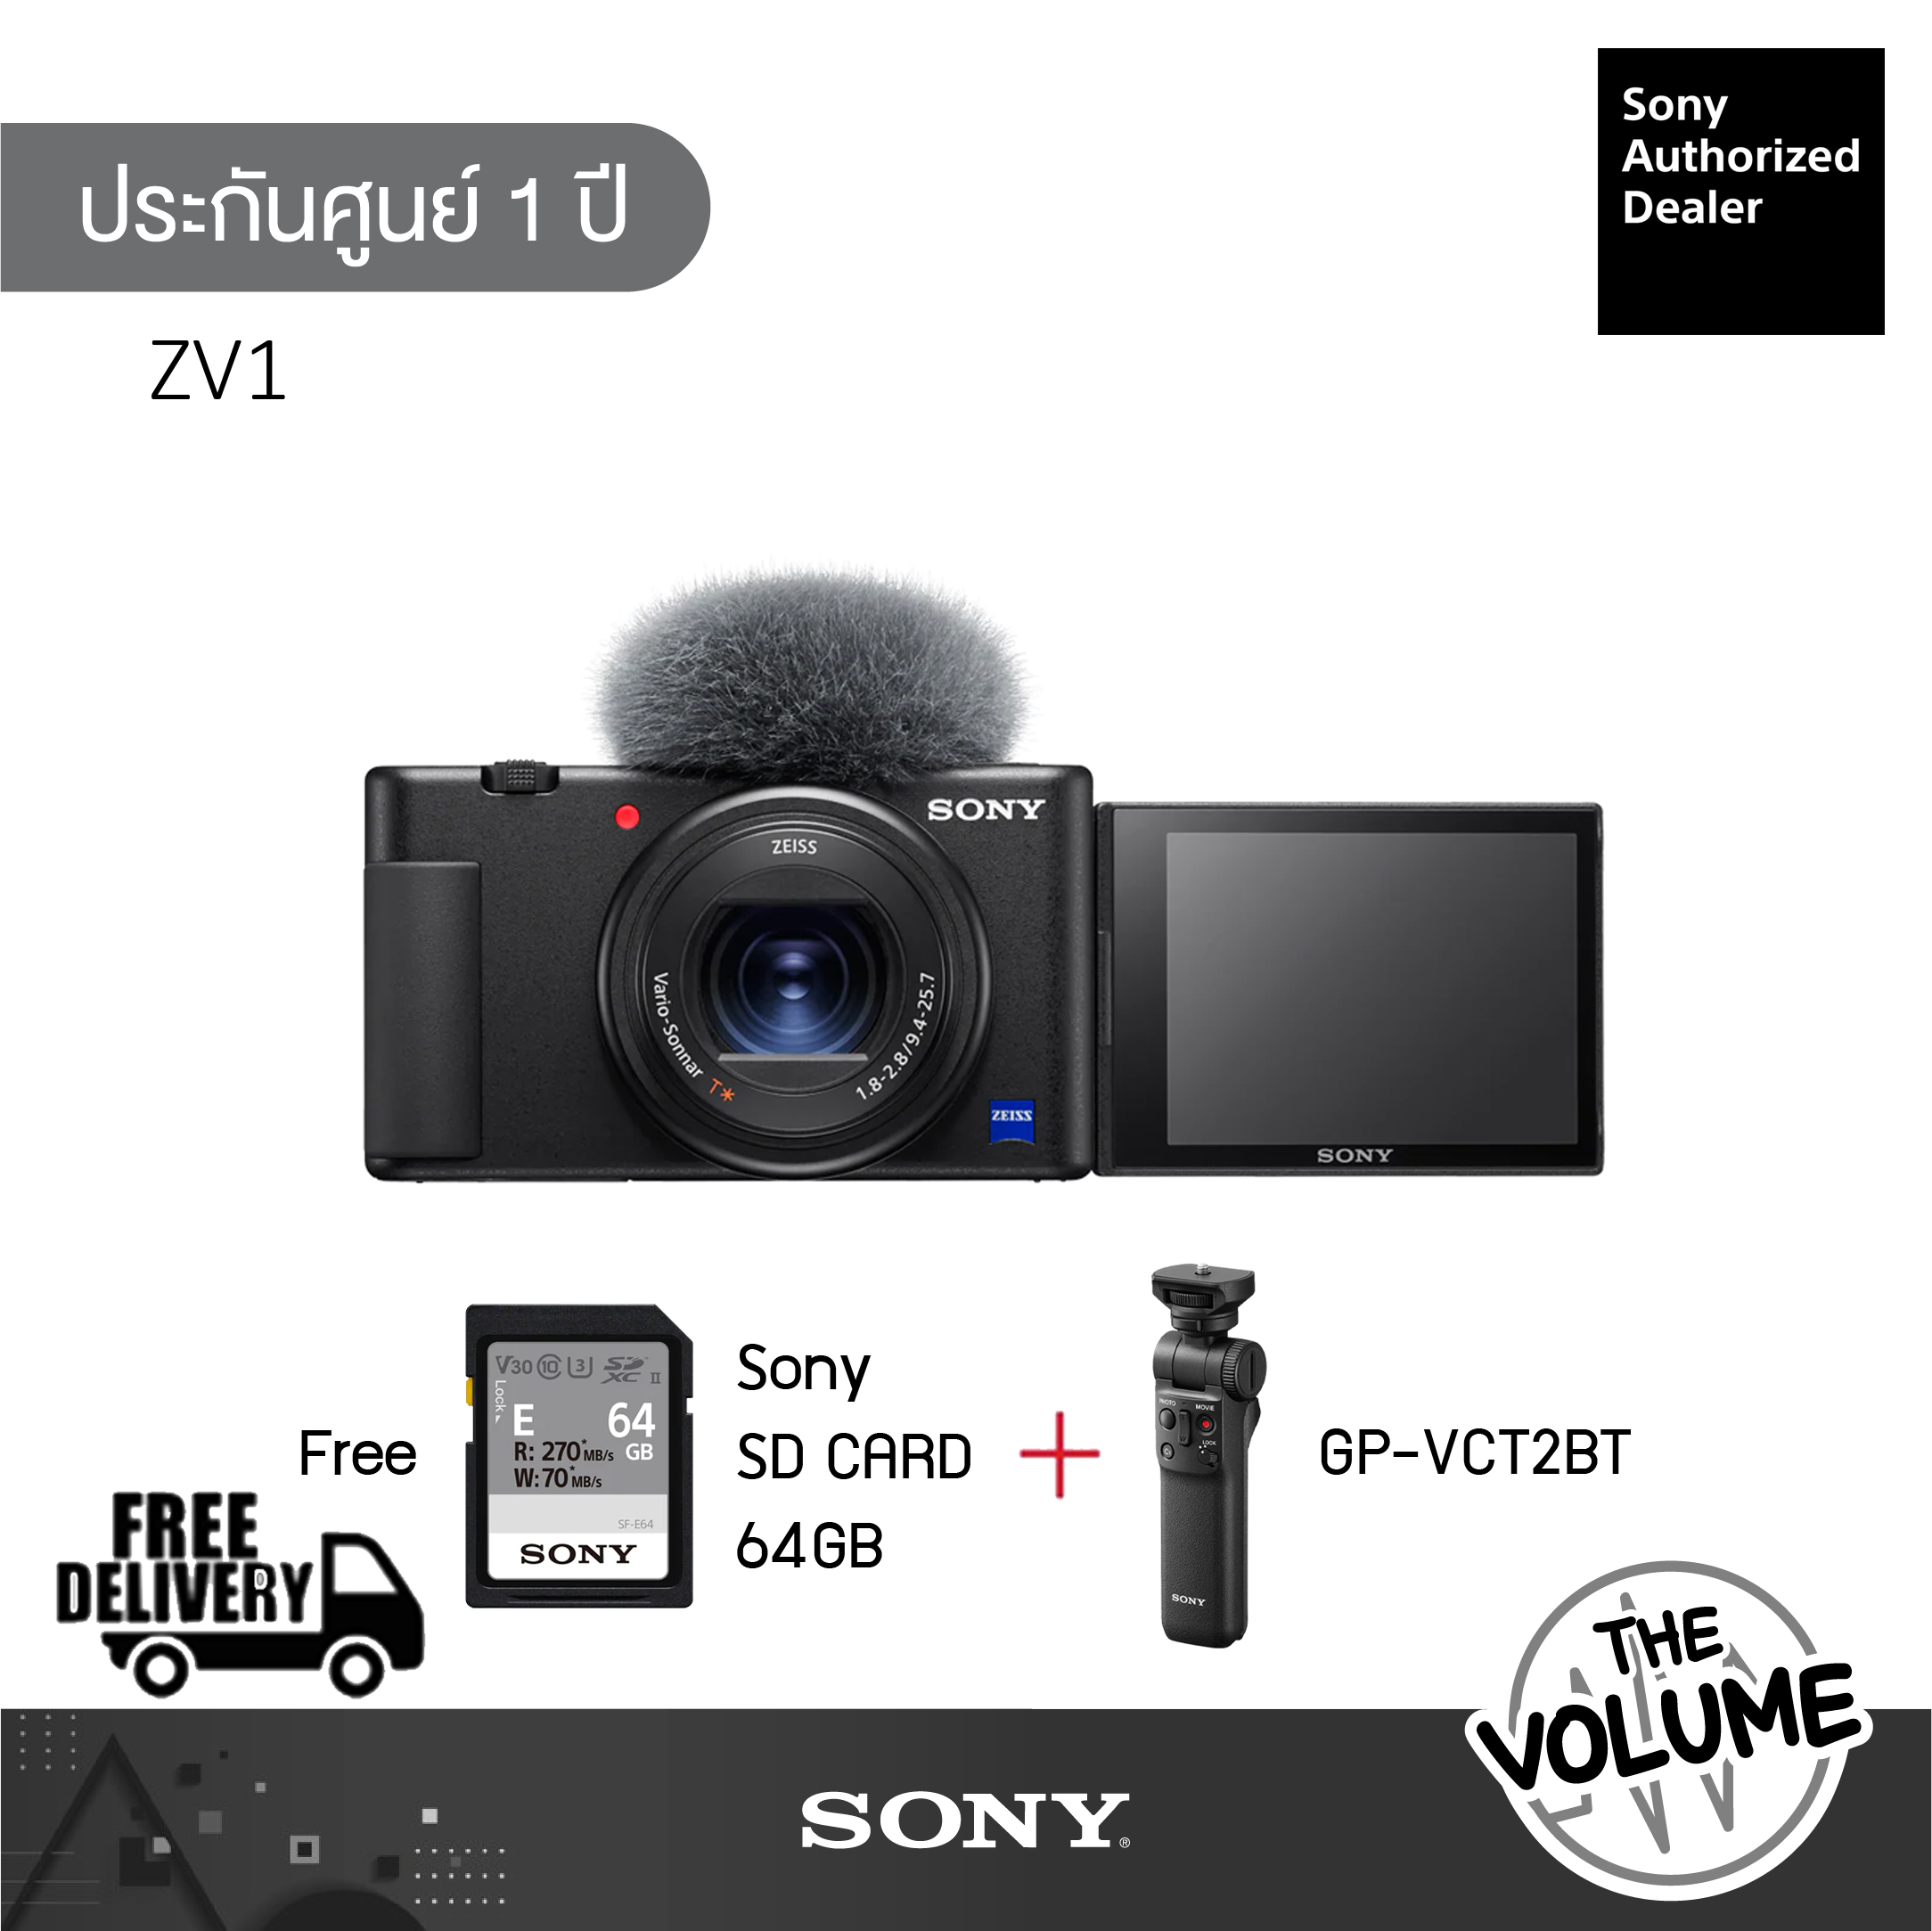 Sony กล้องดิจิตอล ZV1 : Vlog Camera 4K Recording + Wireless Shooting Grip GP-VCT2BT (ประกันศูนย์ Sony 1 ปี)